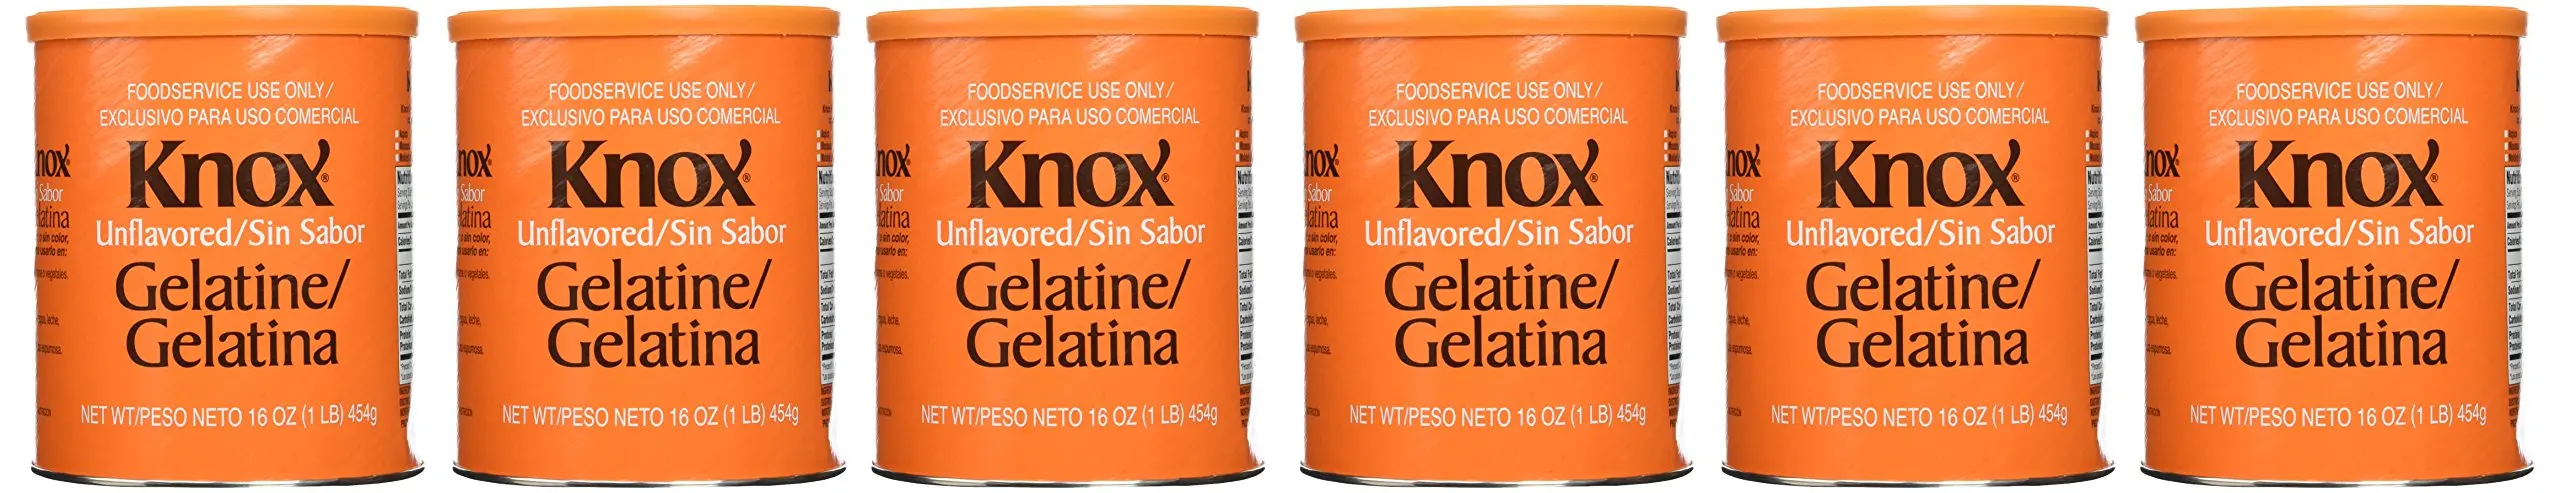 knox gelatin capsules